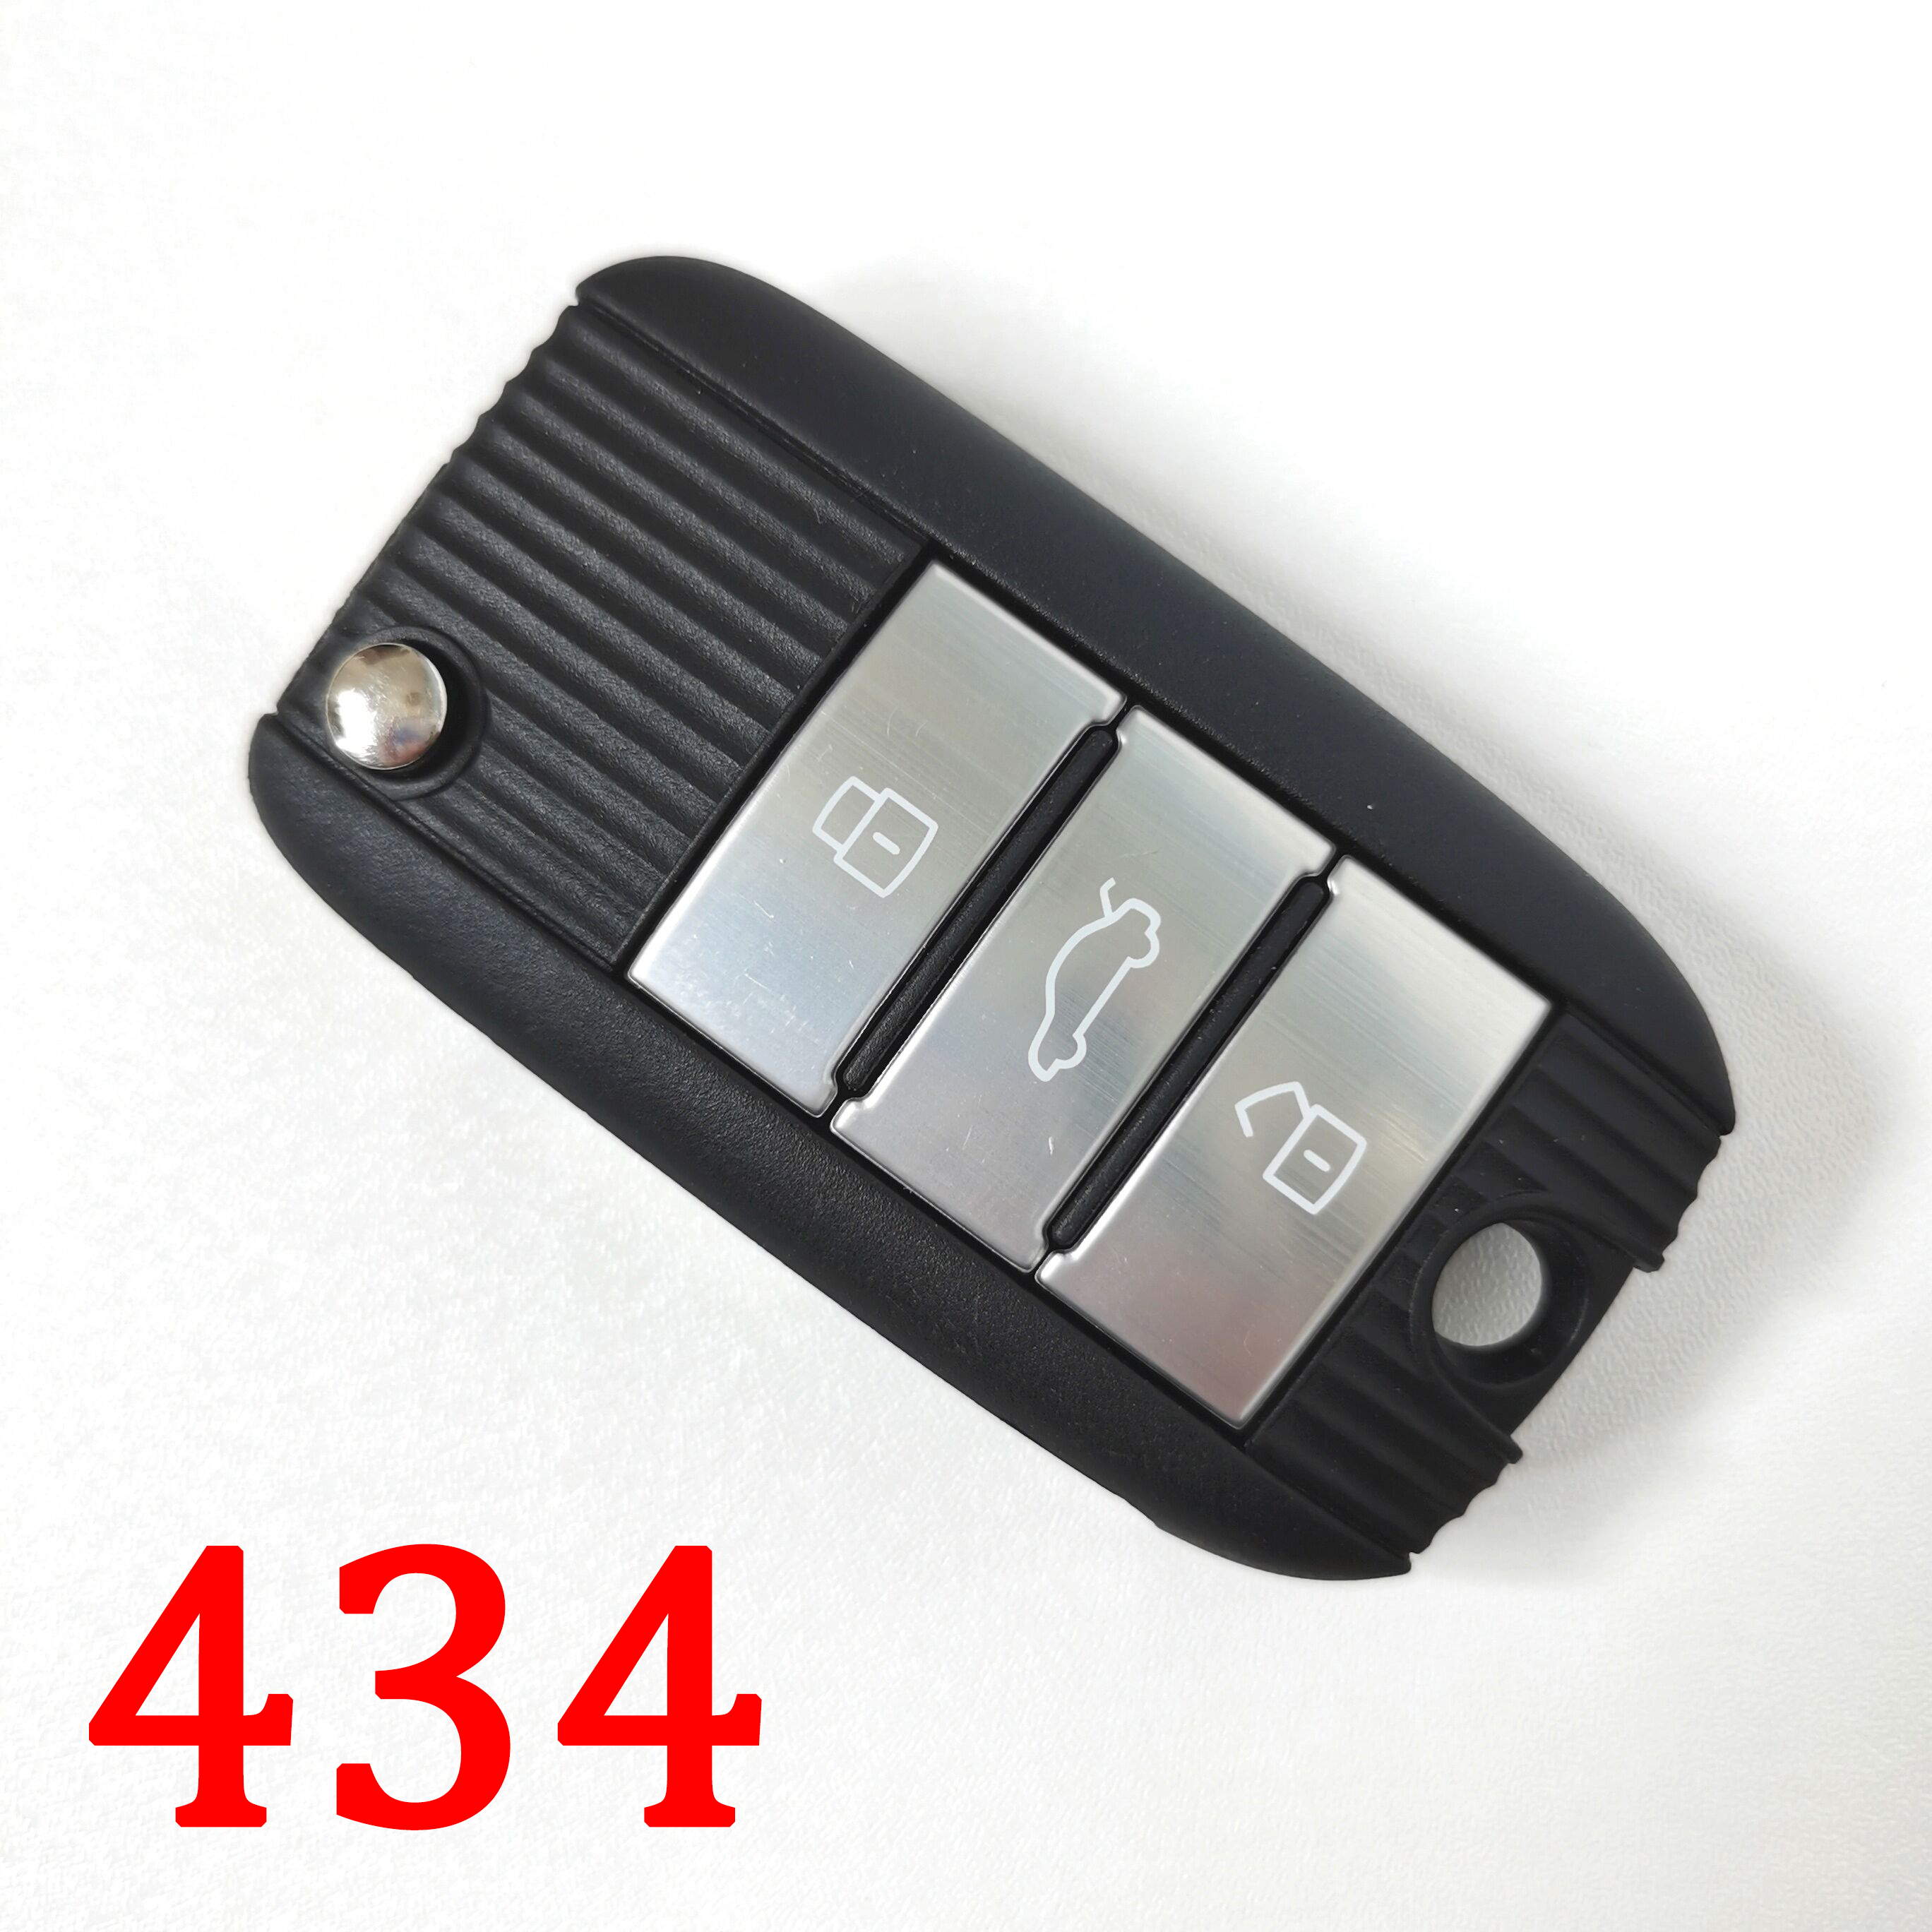 Original 3 Buttons 434 MHz Flip Smart Proximity Key for MG - 47 Chip